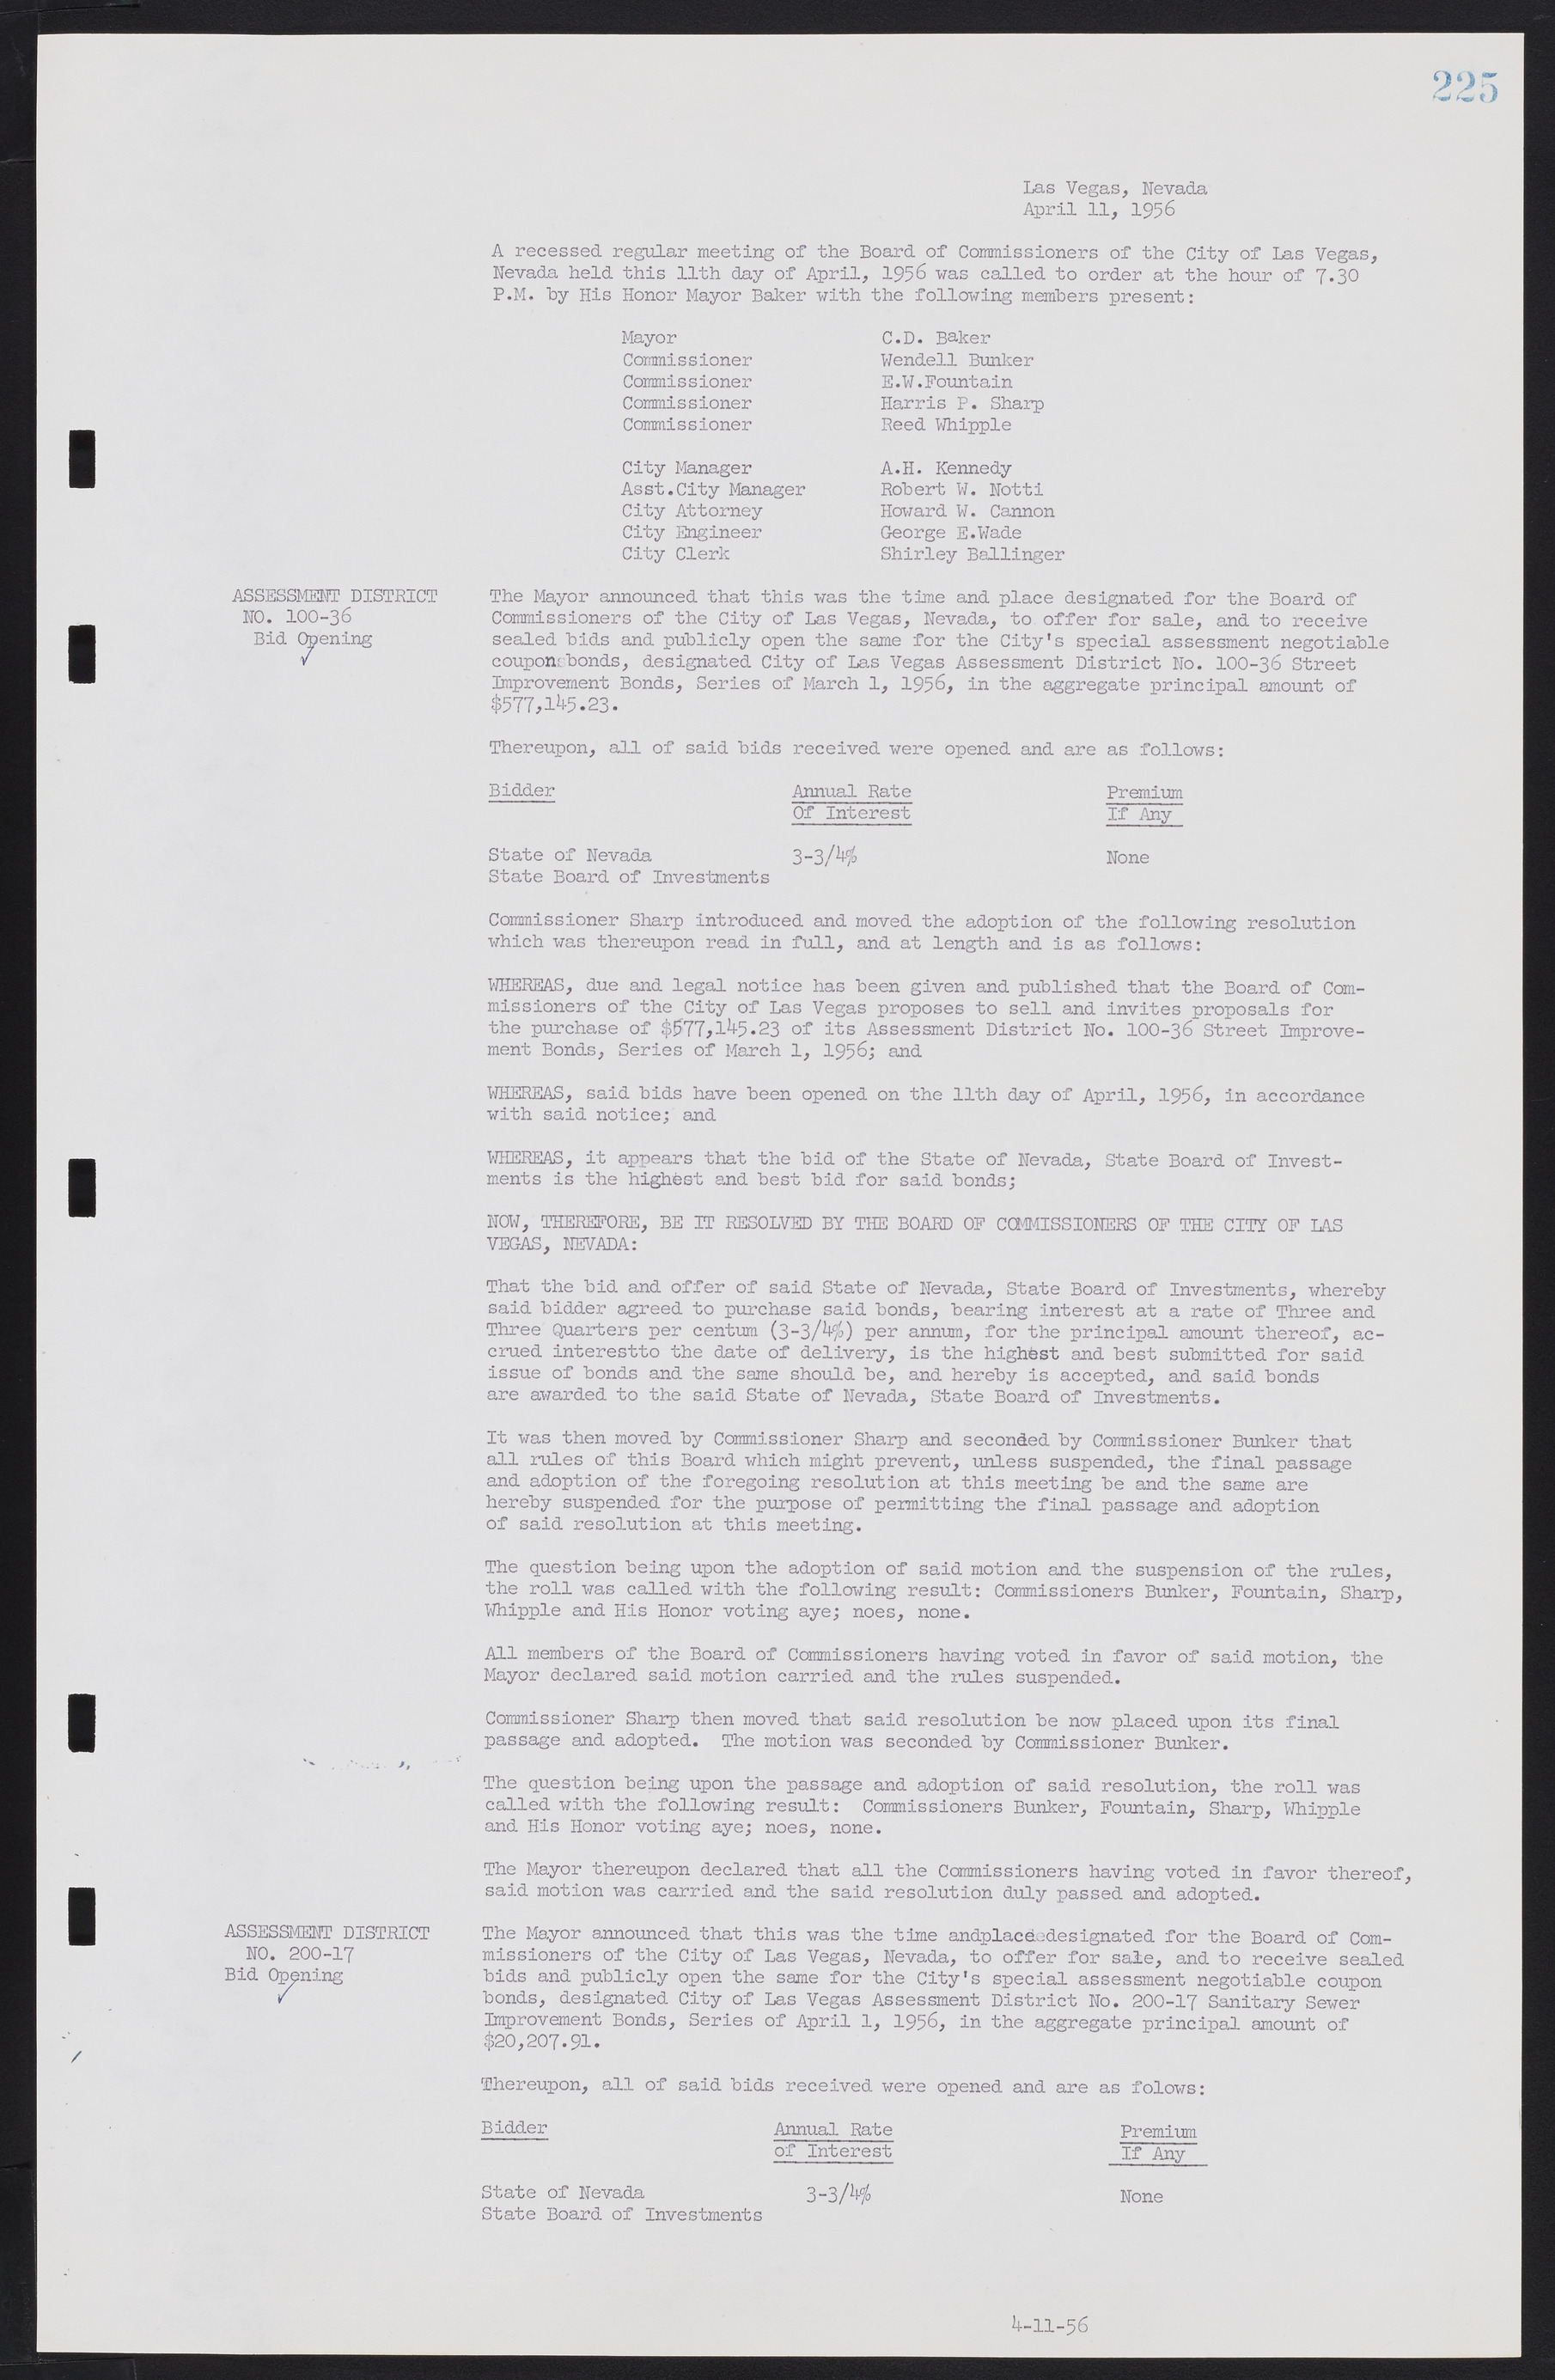 Las Vegas City Commission Minutes, September 21, 1955 to November 20, 1957, lvc000010-243